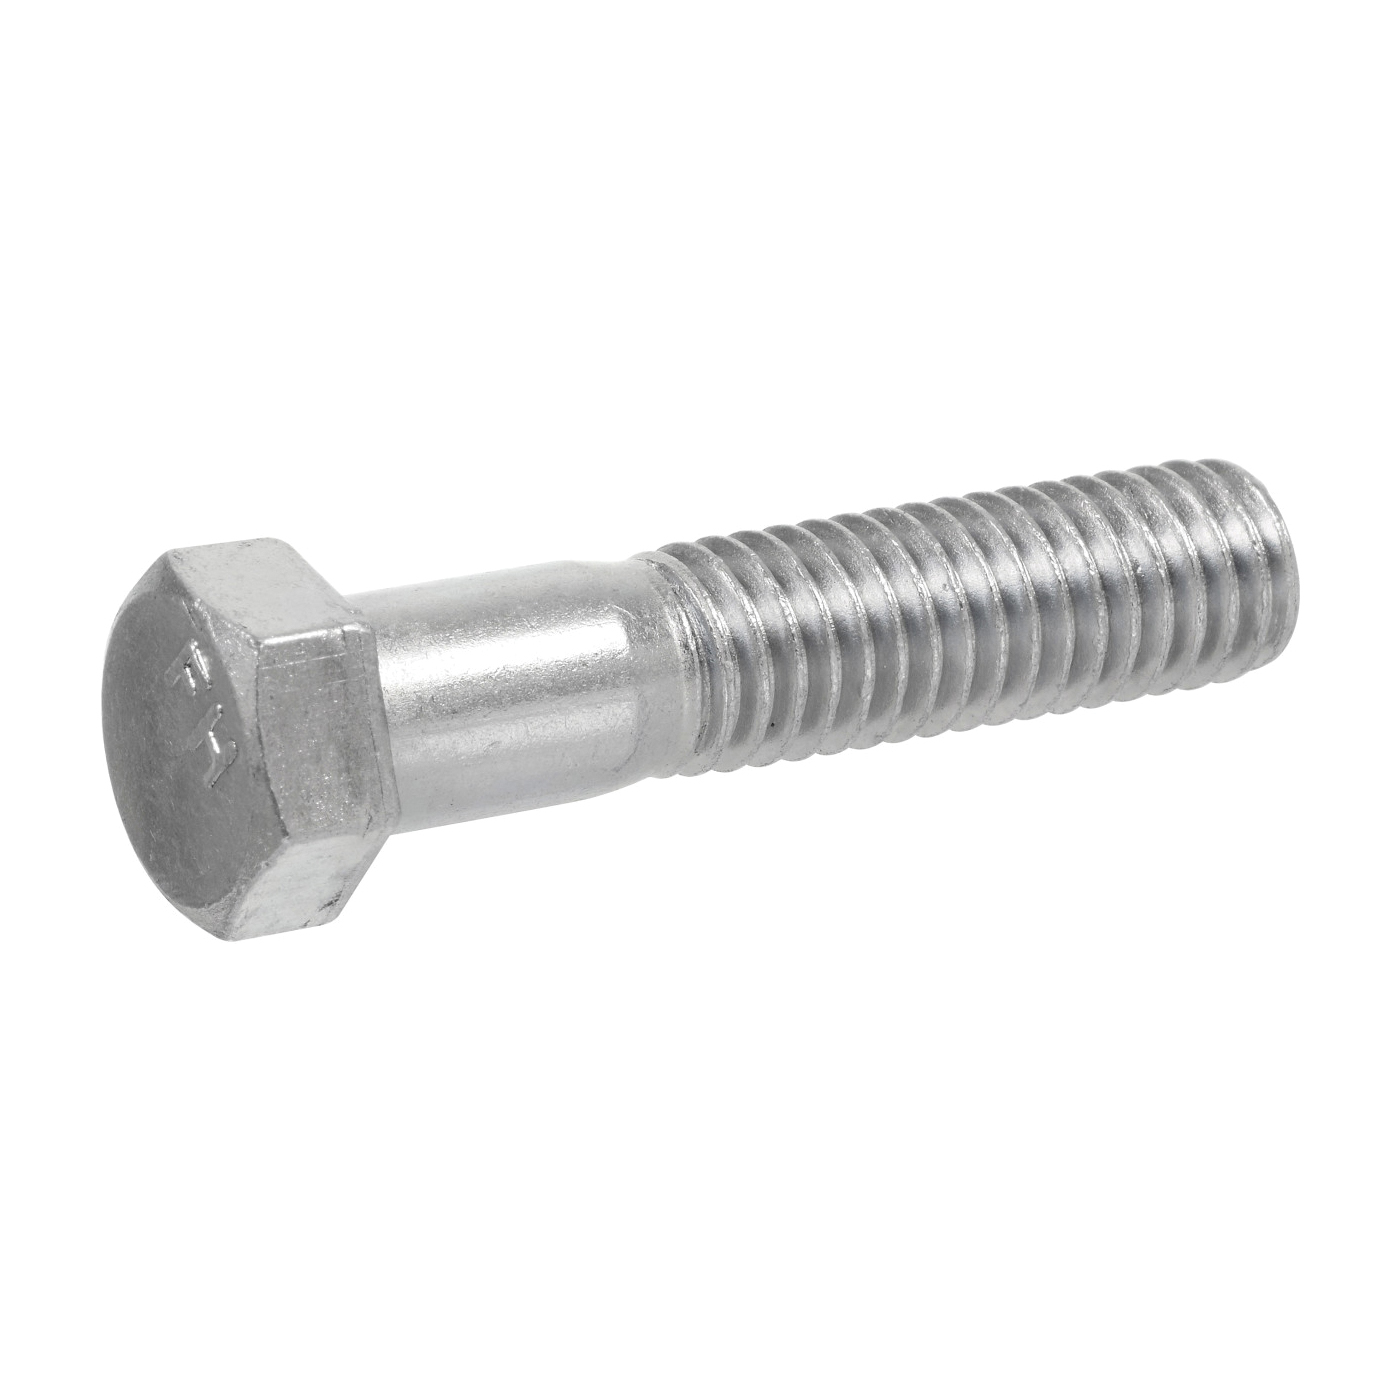 880666 Hex Bolt, M7-1 Thread, 16 mm OAL, 8.8 Grade, Steel, Zinc-Plated, Metric Measuring, Fine Thread